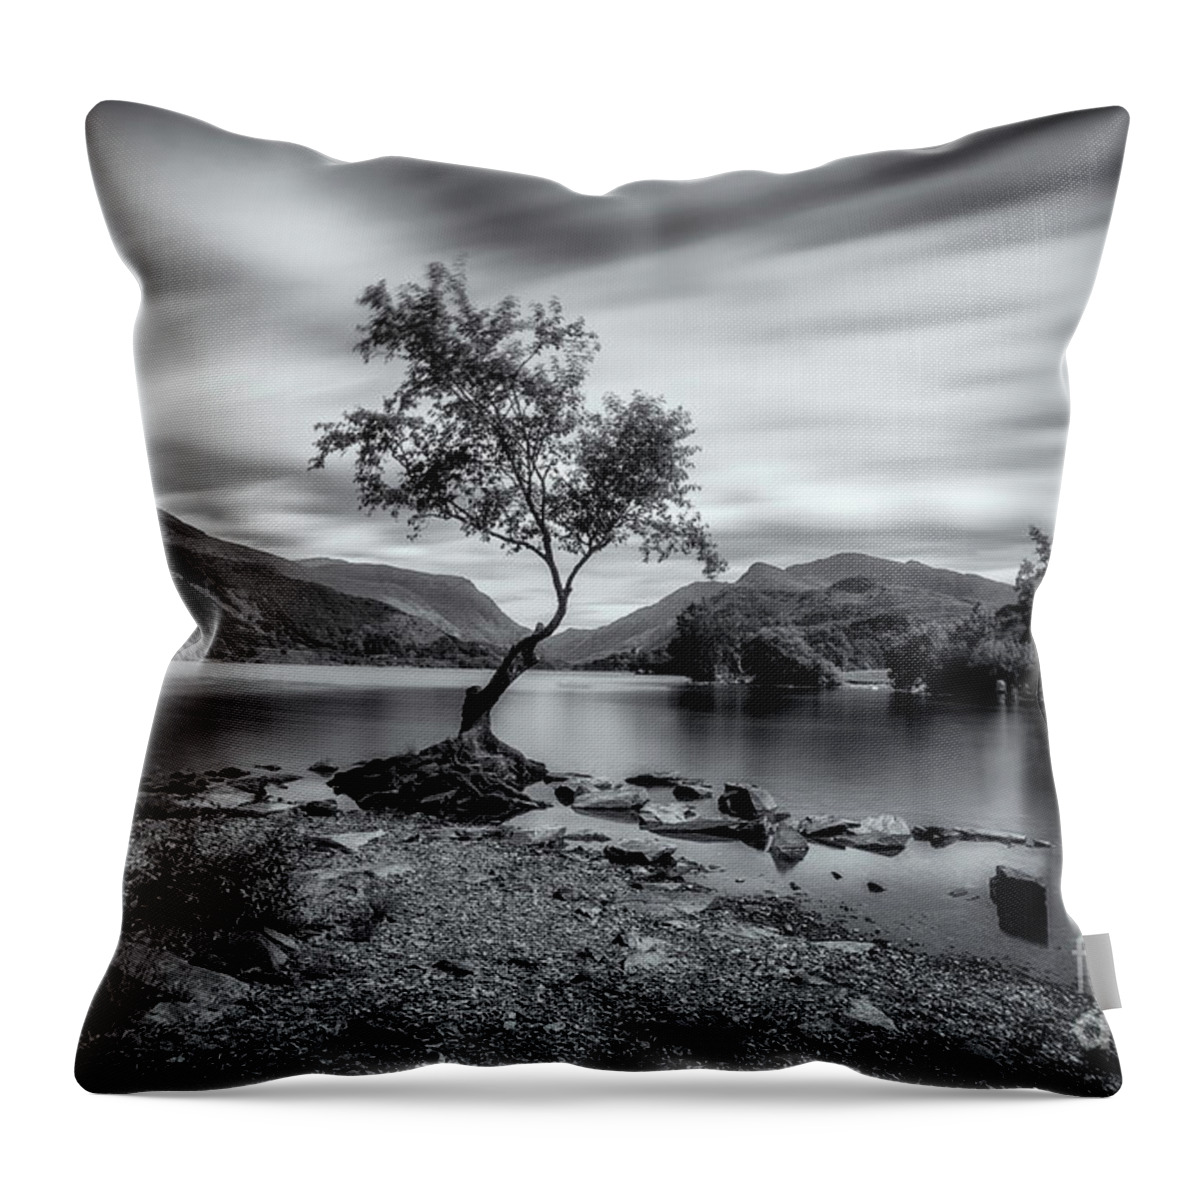 Llyn Padarn Throw Pillow featuring the photograph The lonely tree at Llyn Padarn lake - Part 2 by Mariusz Talarek